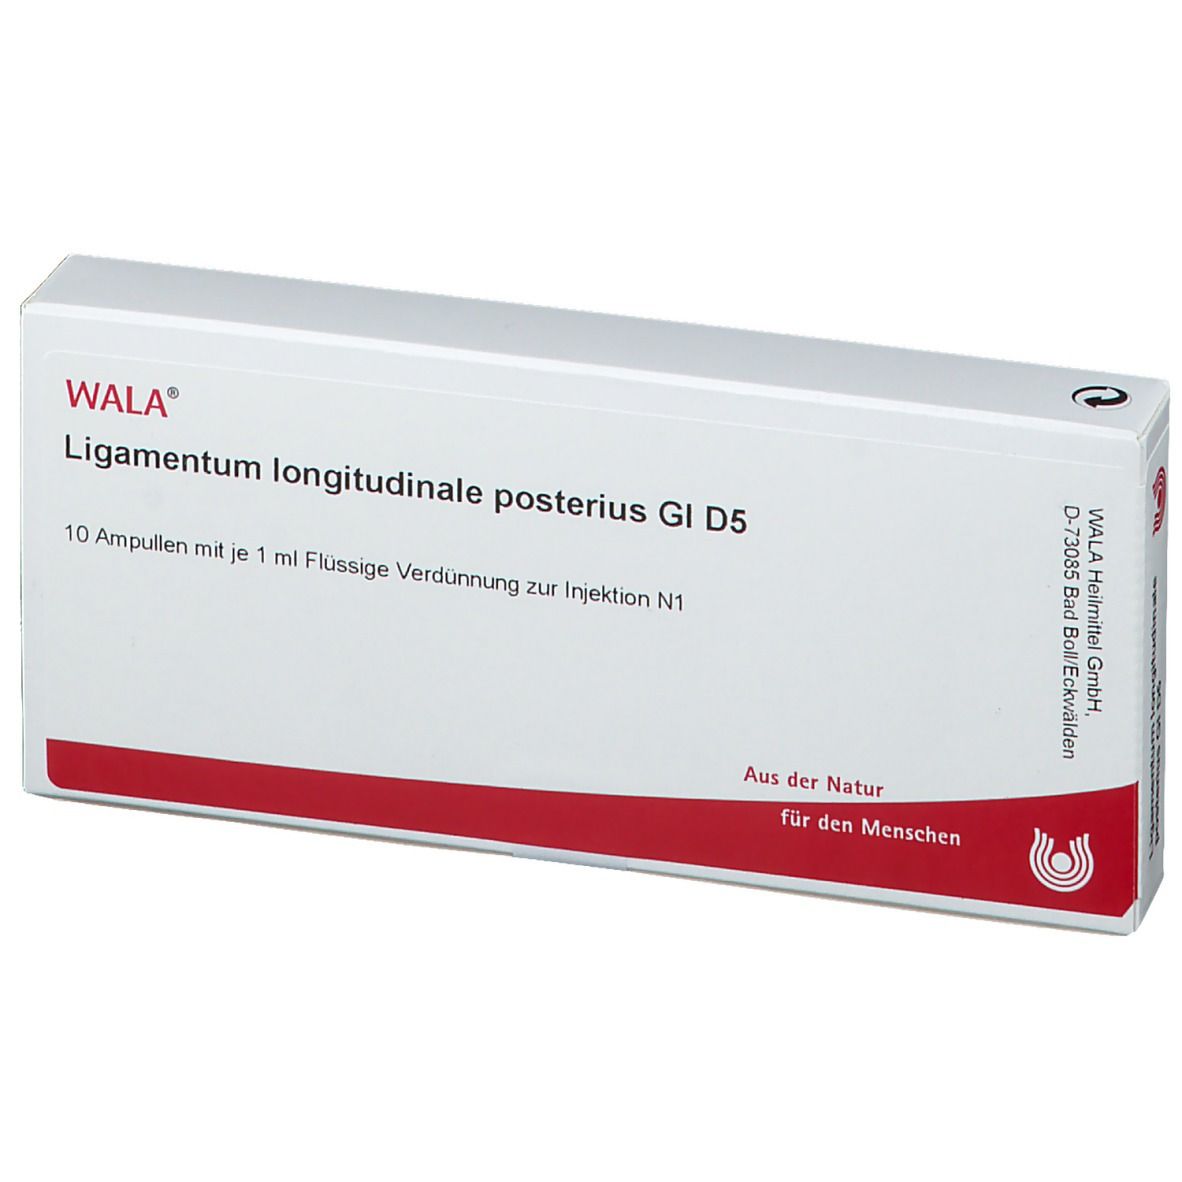 WALA® Ligamentum longitudinale posterius Gl D 5